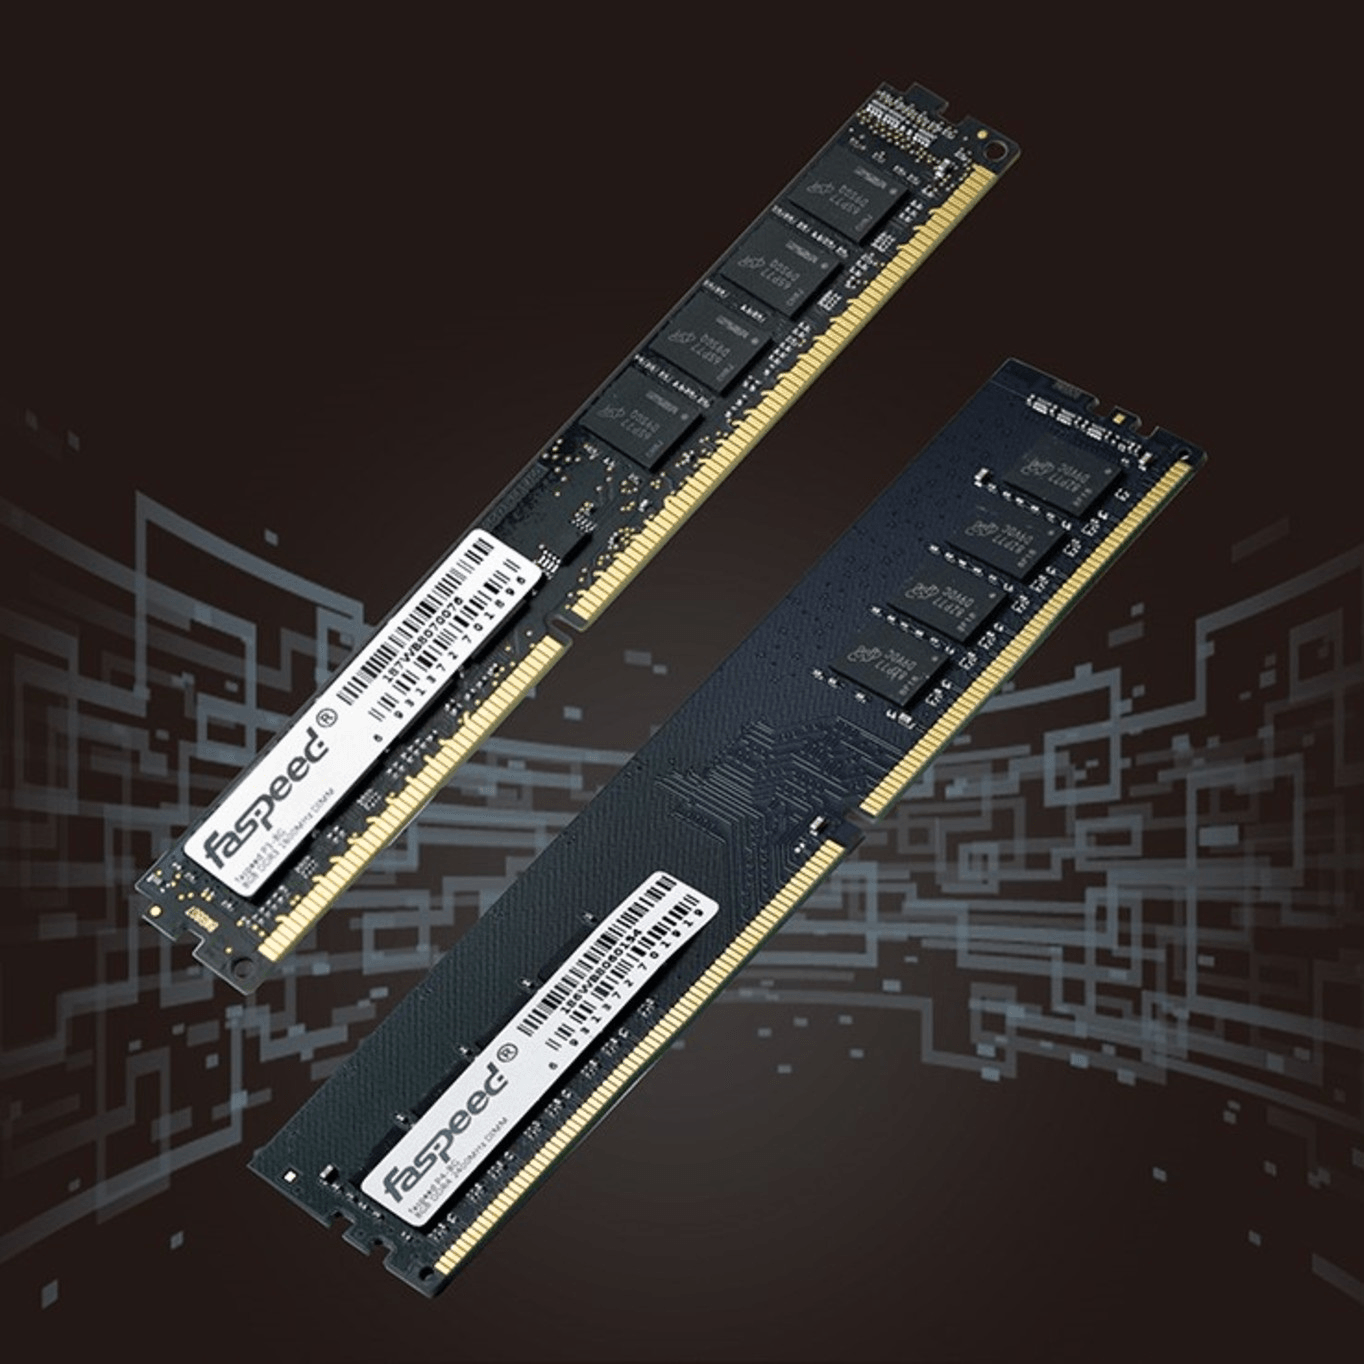 Faspeed RAM P3 P4 DDR3 DDR4 黑色背景 高科技